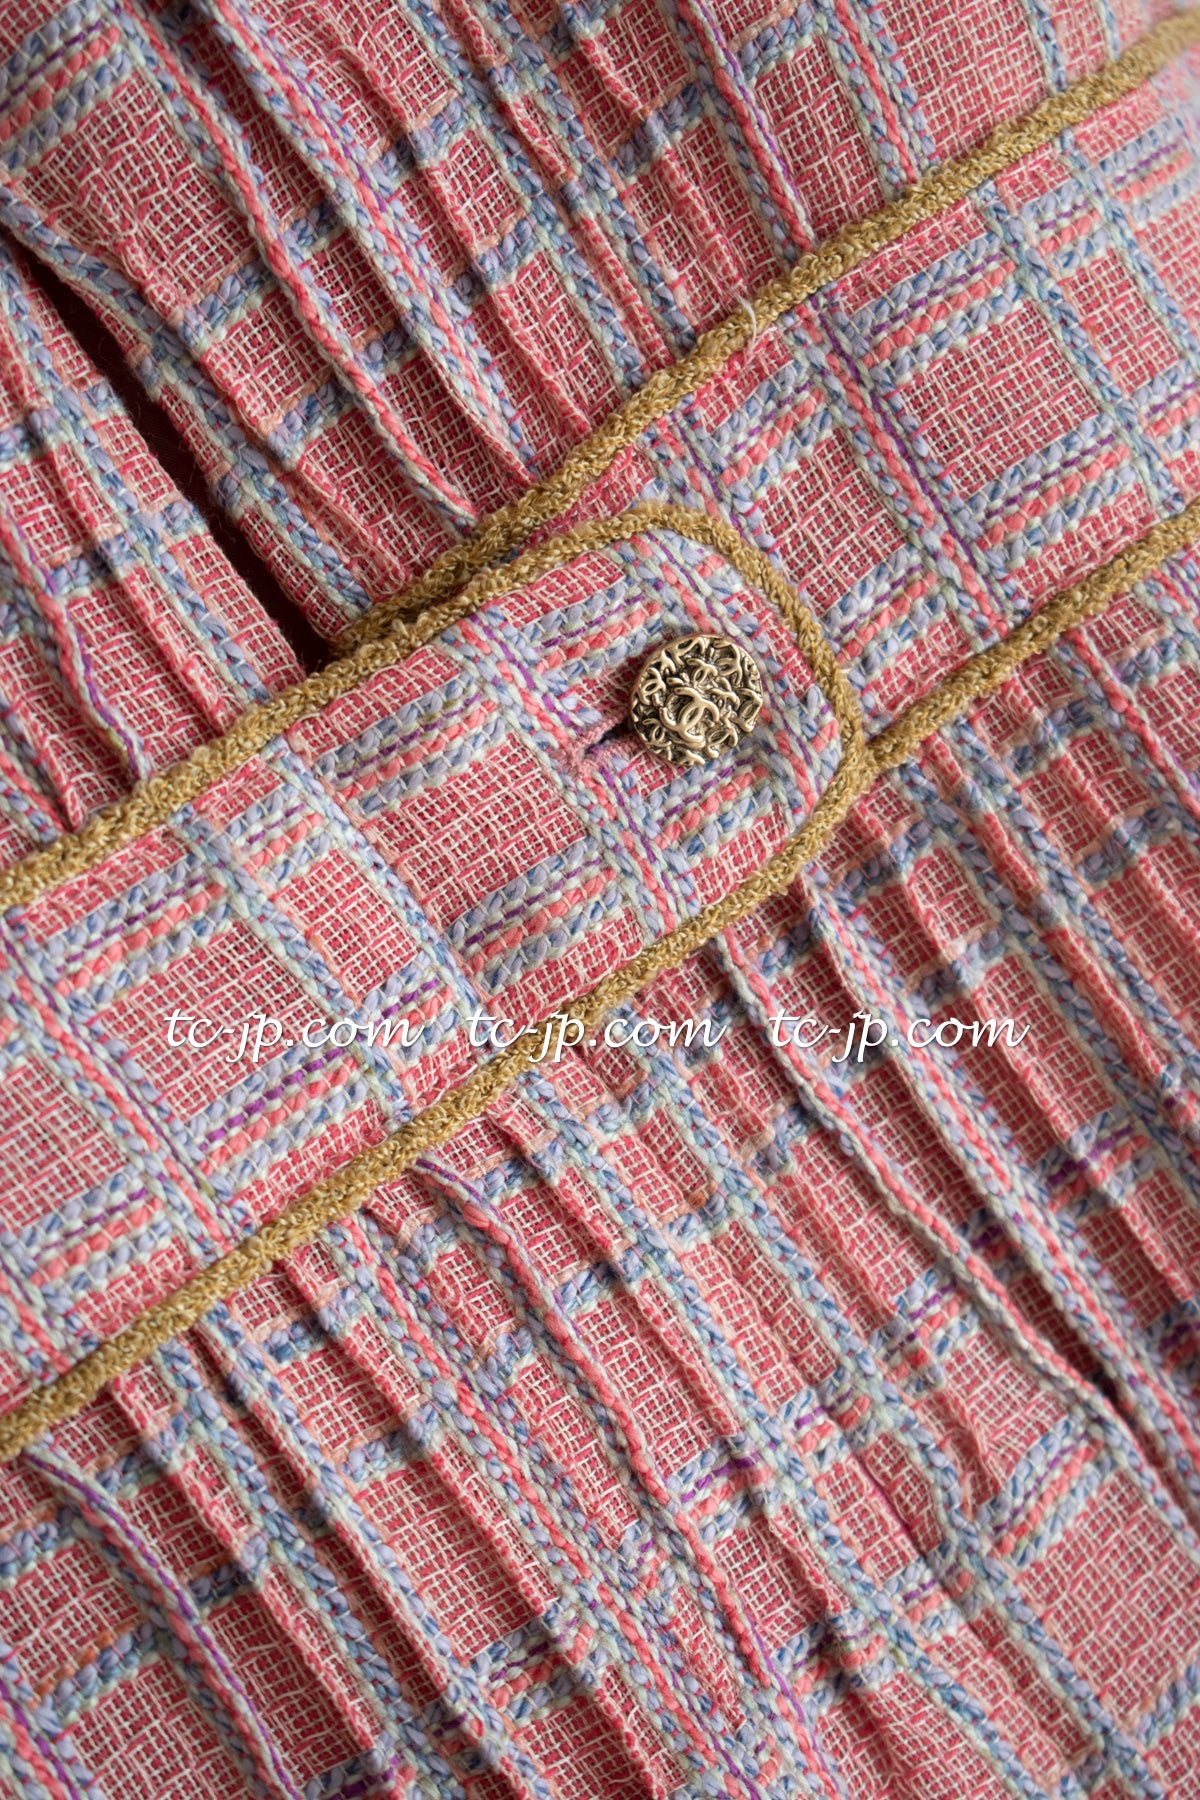 CHANEL 04S Pink Cotton Wool Dress Coat 36 38 シャネル ピンク コットン ワンピース 即発 - TC JAPAN